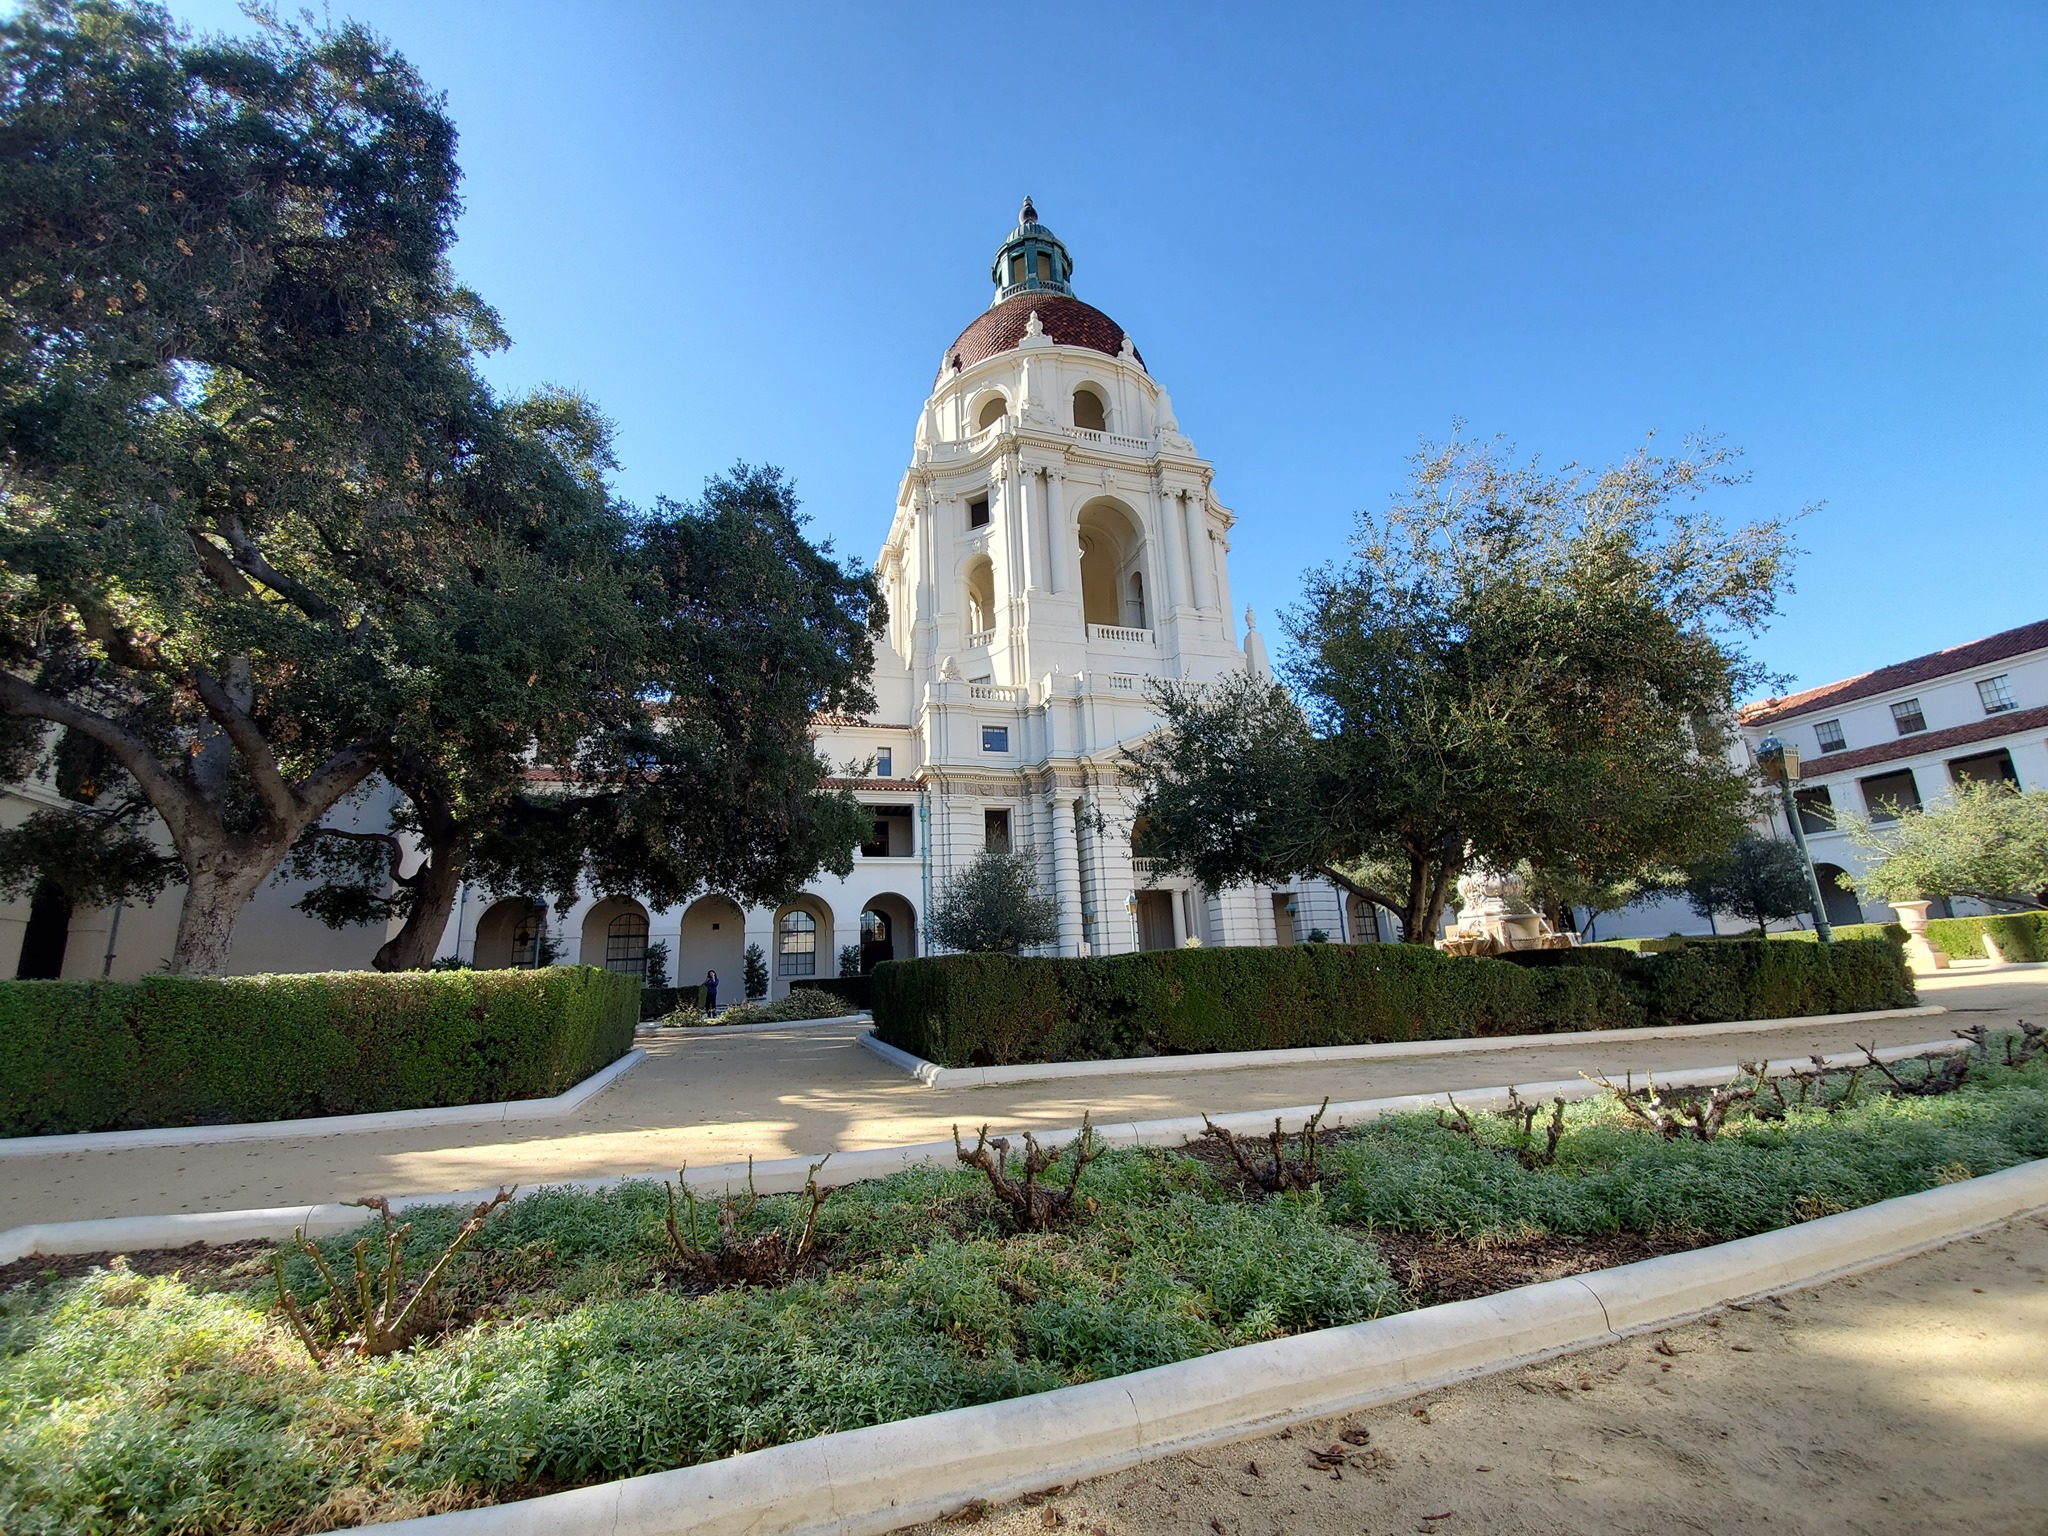 City of Pasadena